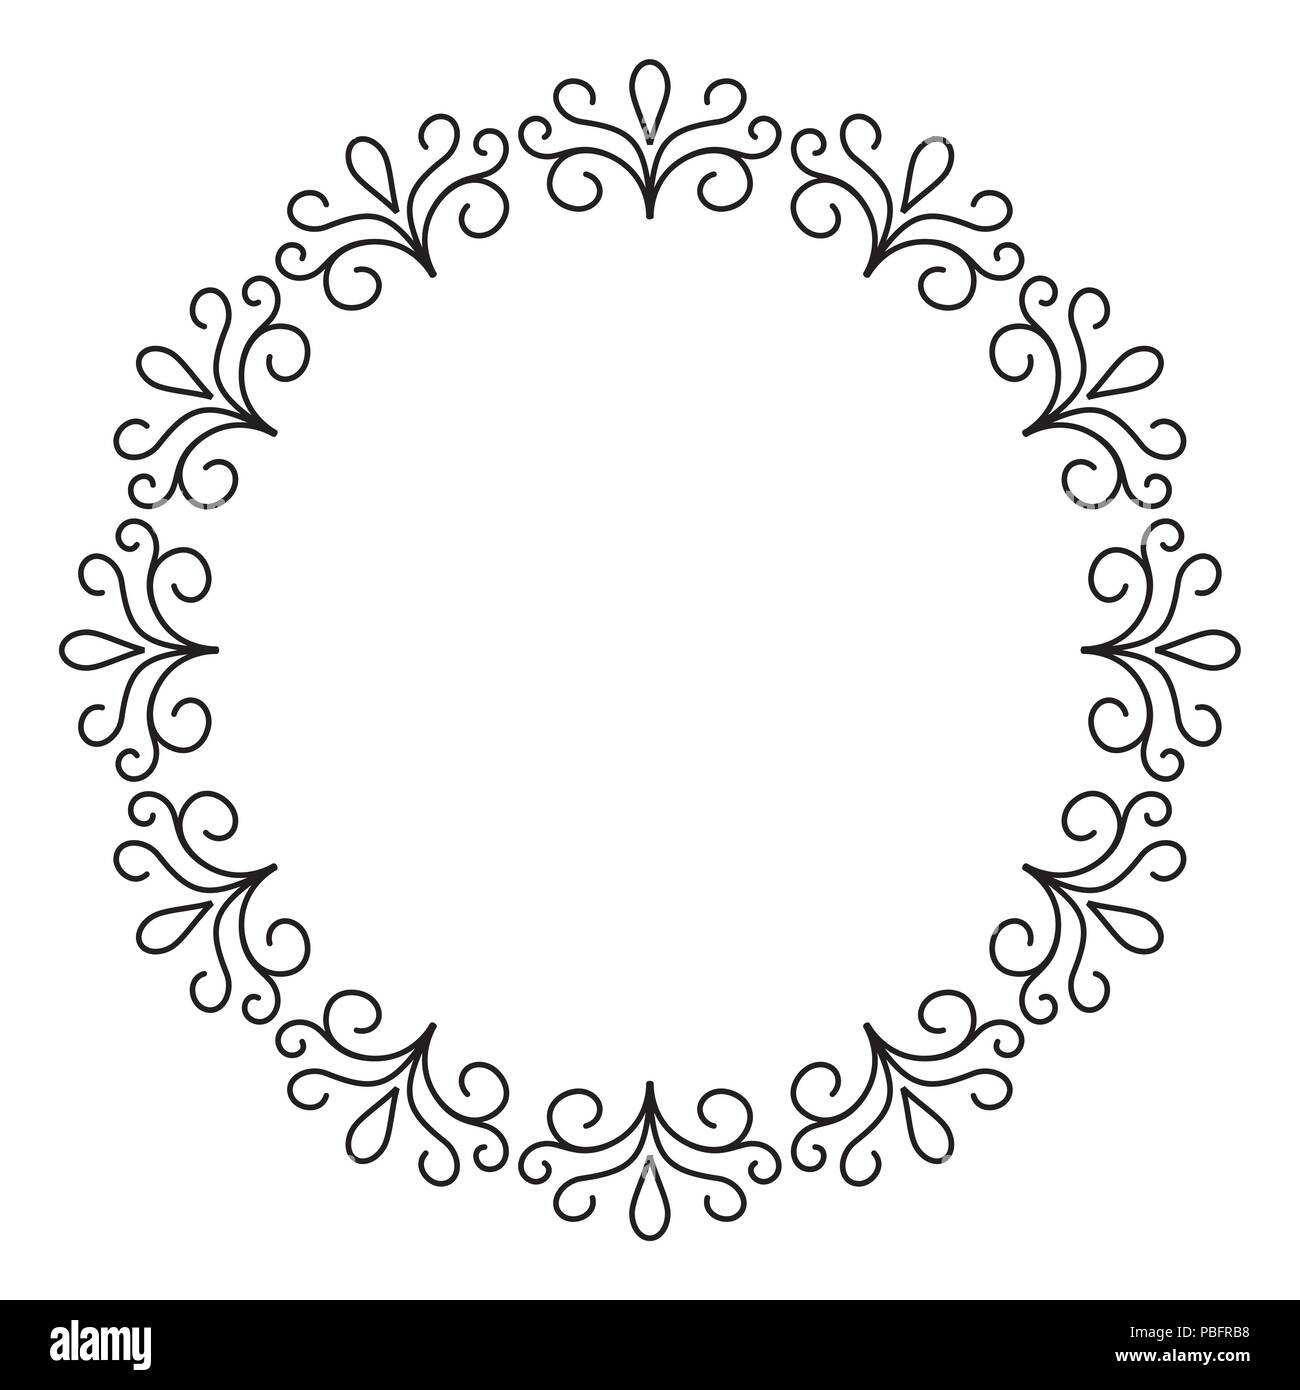 Outline Decorative Circle Frame Design Monochrome Border Stock